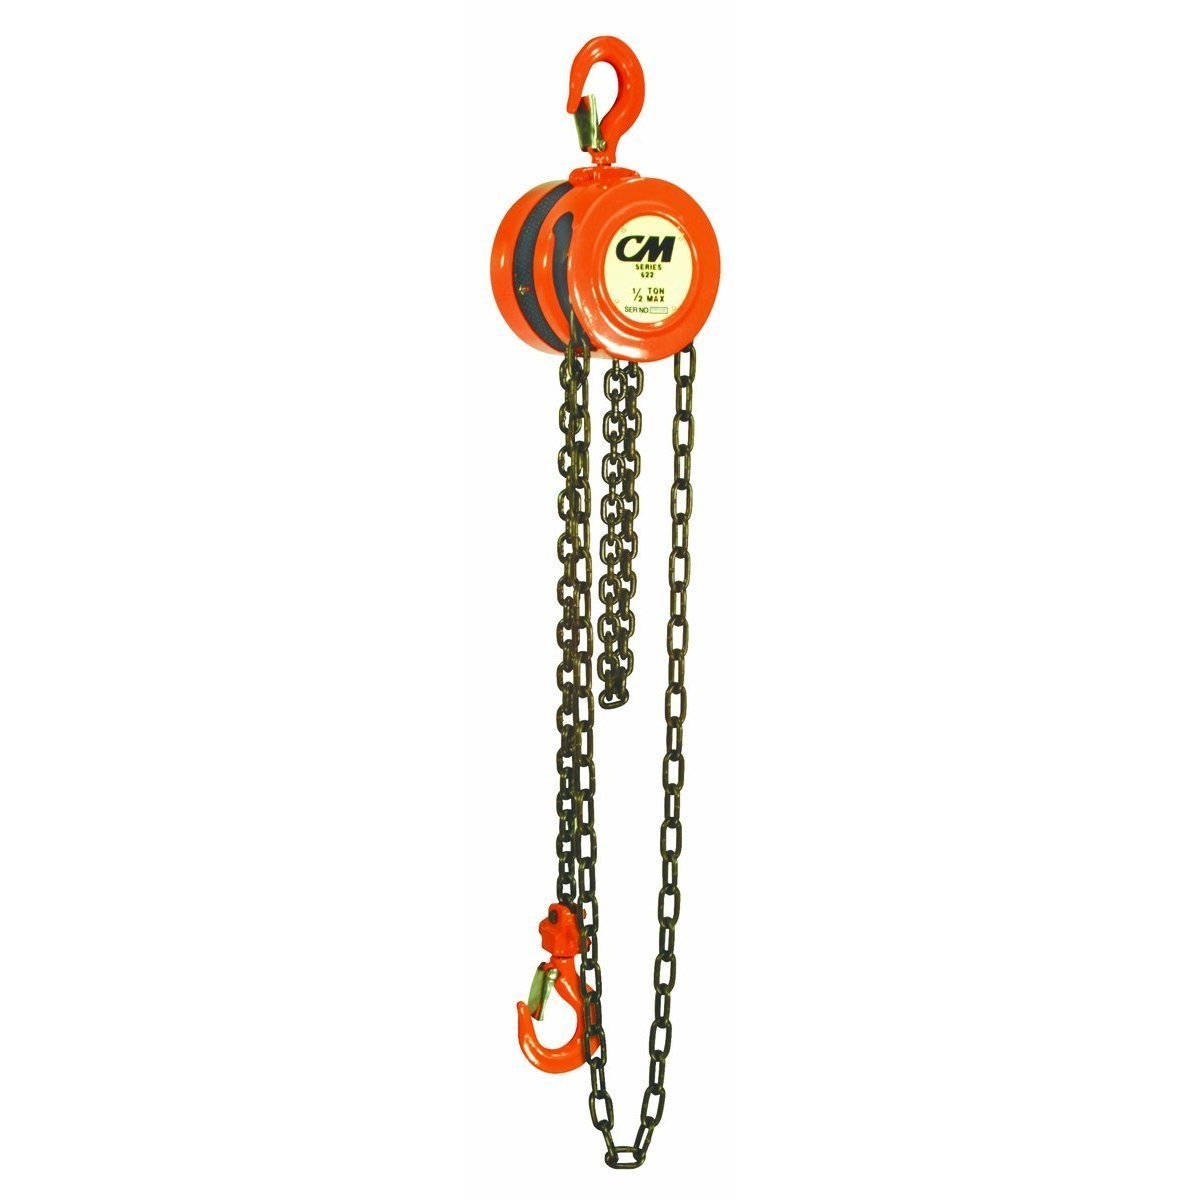 CM - Series 622 1/2 Ton Hand Chain Hoist (10' Lift)